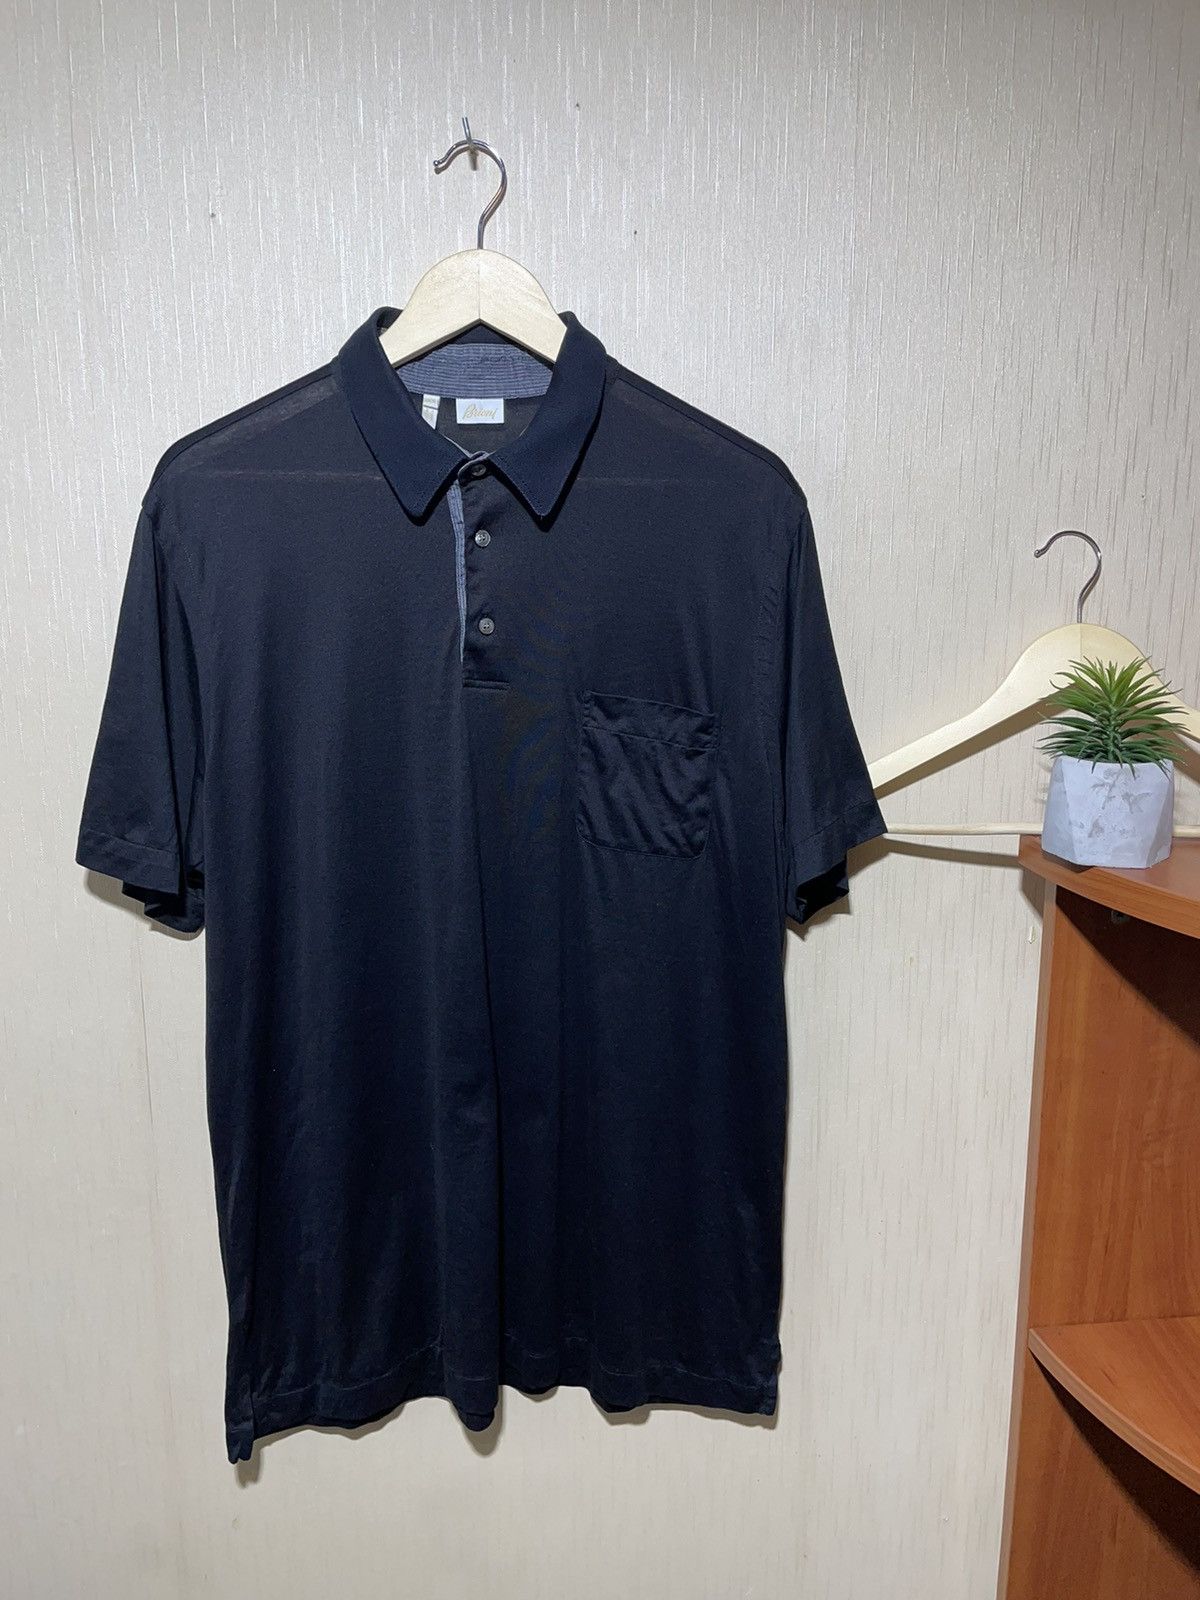 Brioni Brioni vintage polo shirt | Grailed